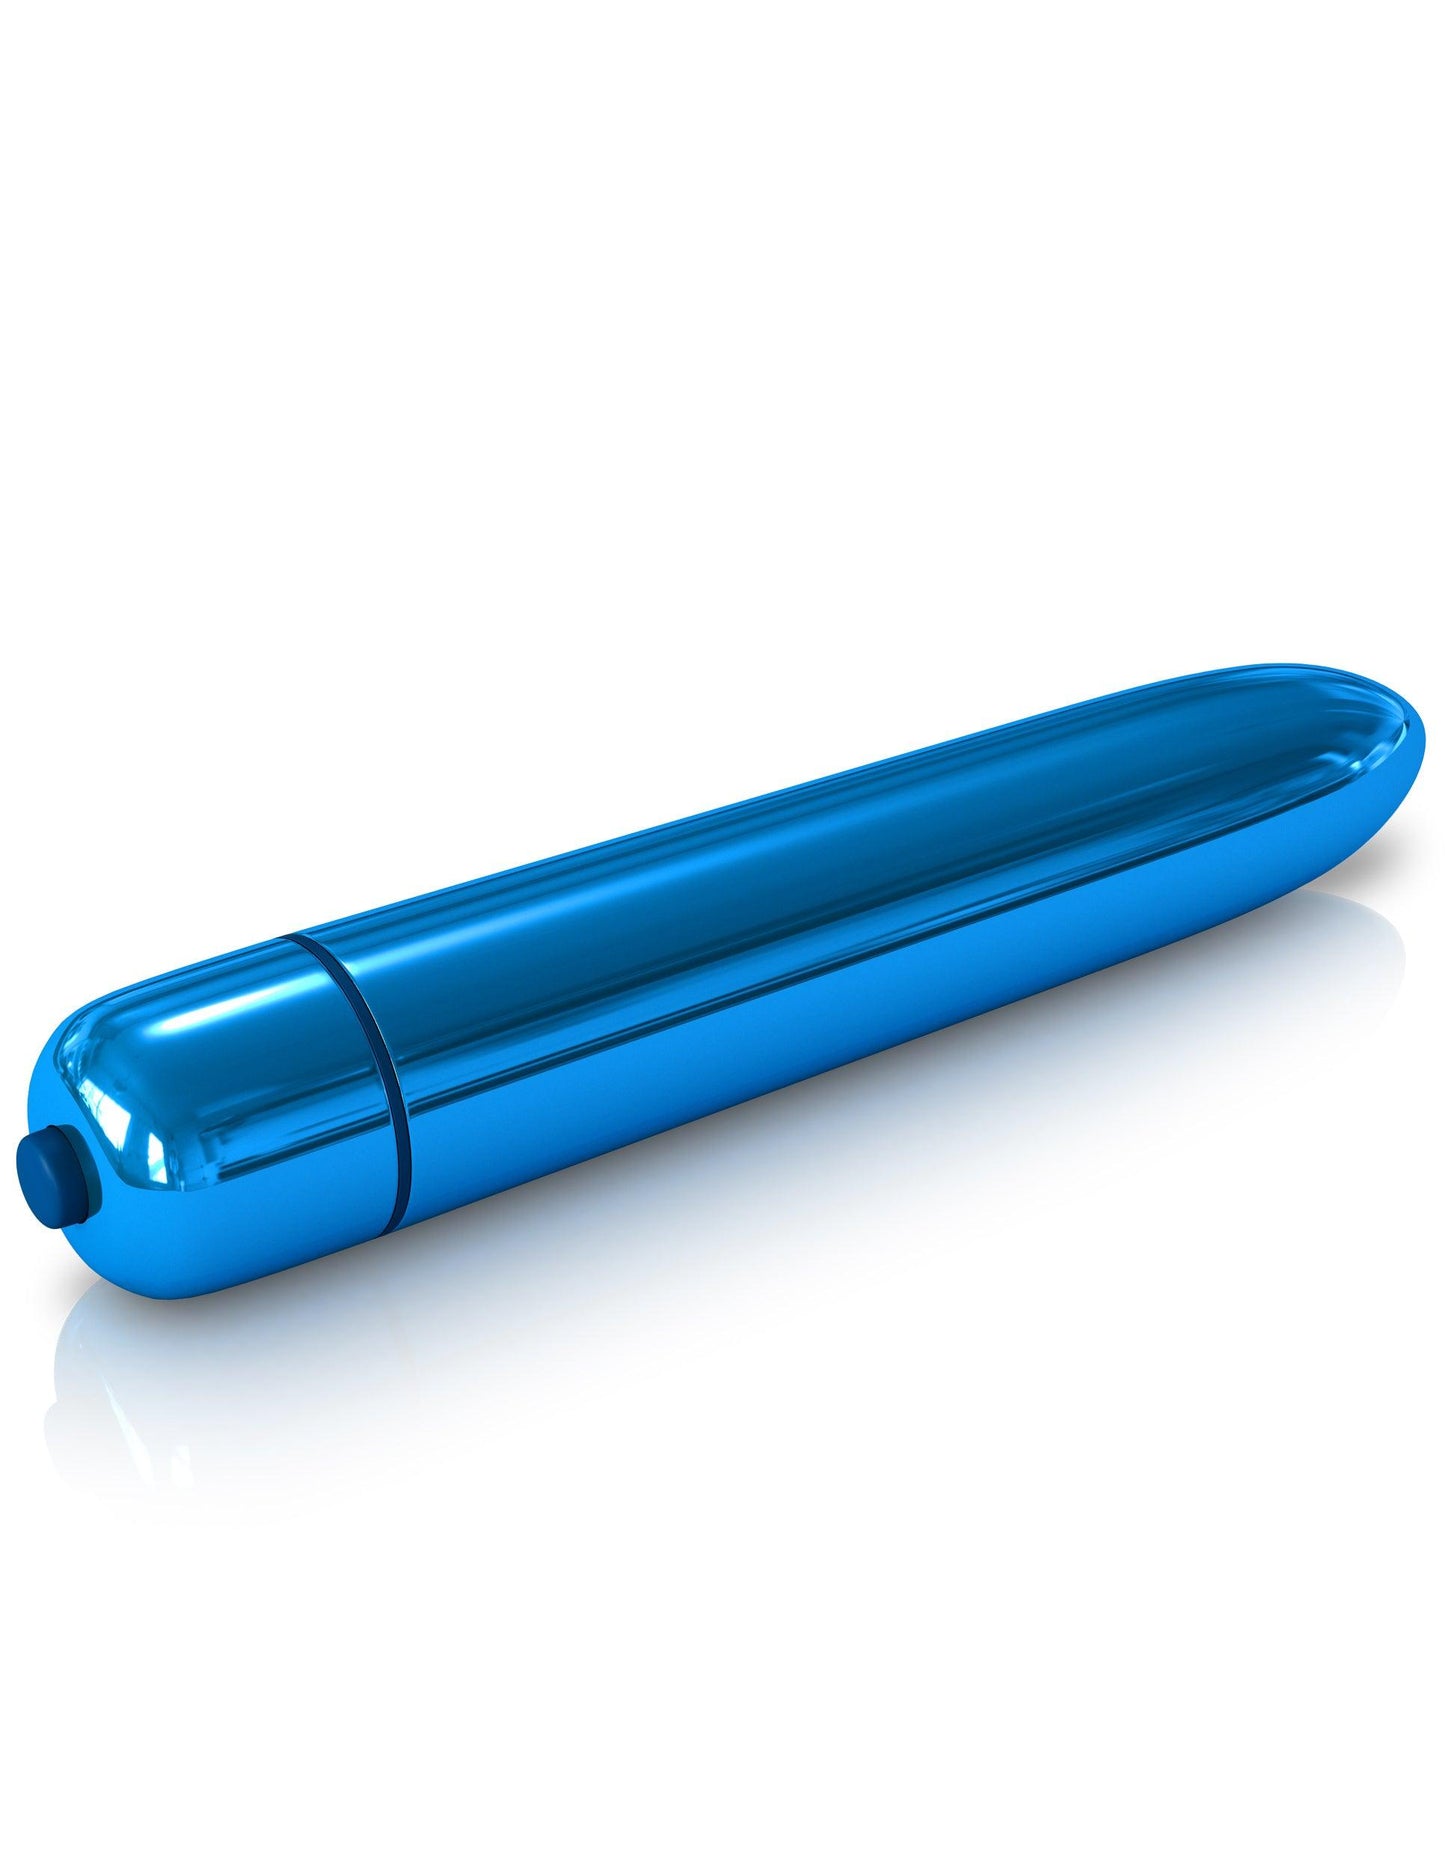 Classix Rocket Bullet - Blue - My Sex Toy Hub